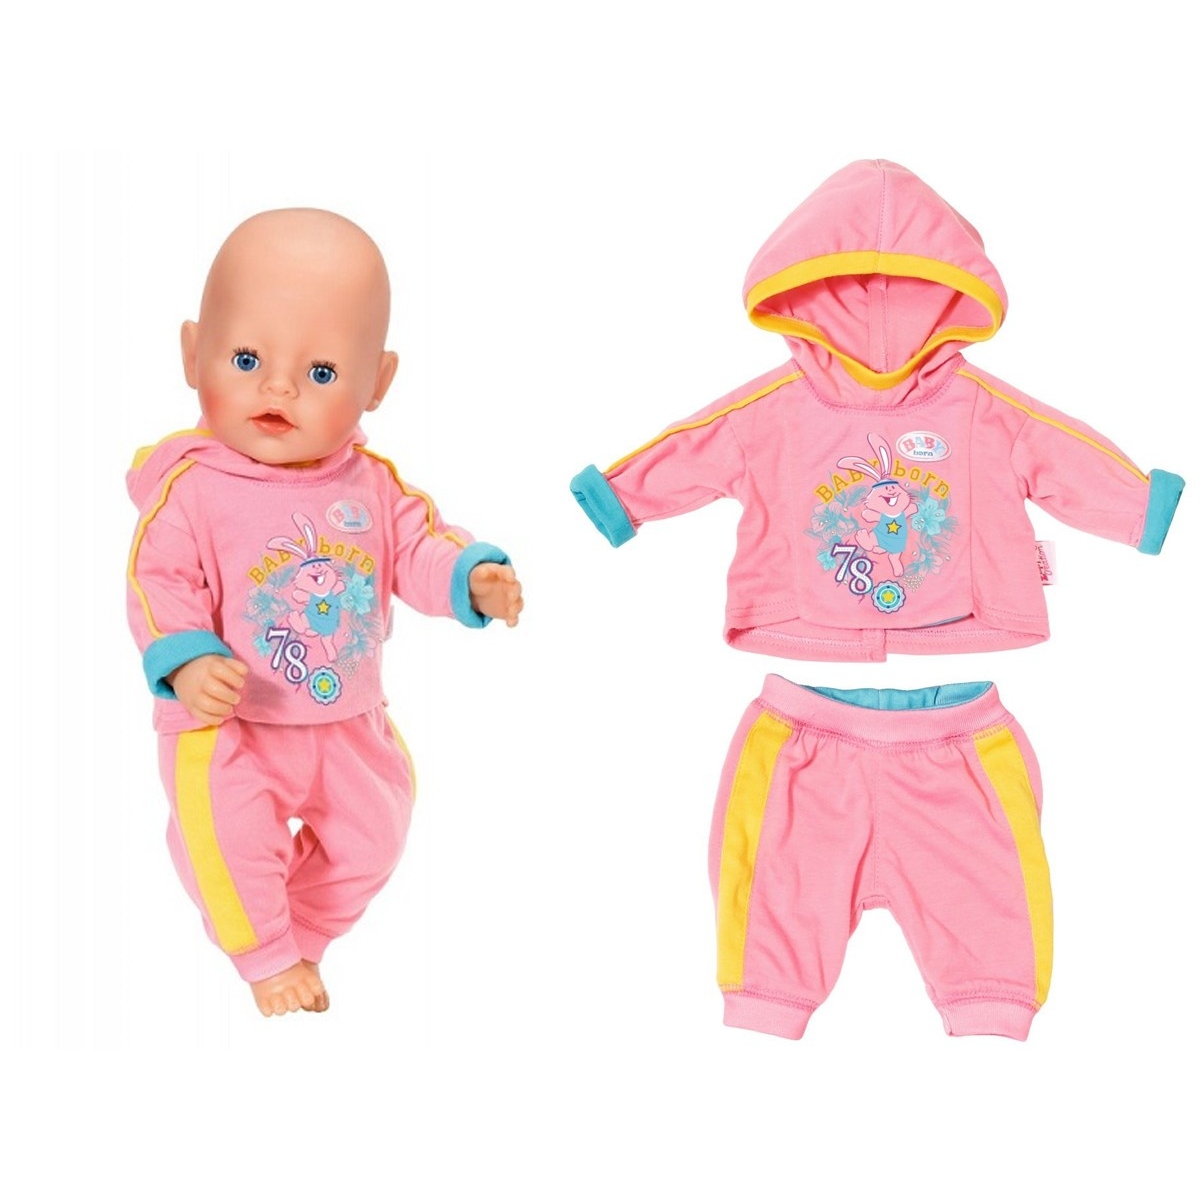 Детская одежда кукла. Спортивный костюм для бейби Борн. Кукла Беби Борн. Zapf Creation одежда для куклы Baby born 824559. Беби боны Беби боны Беби боны.